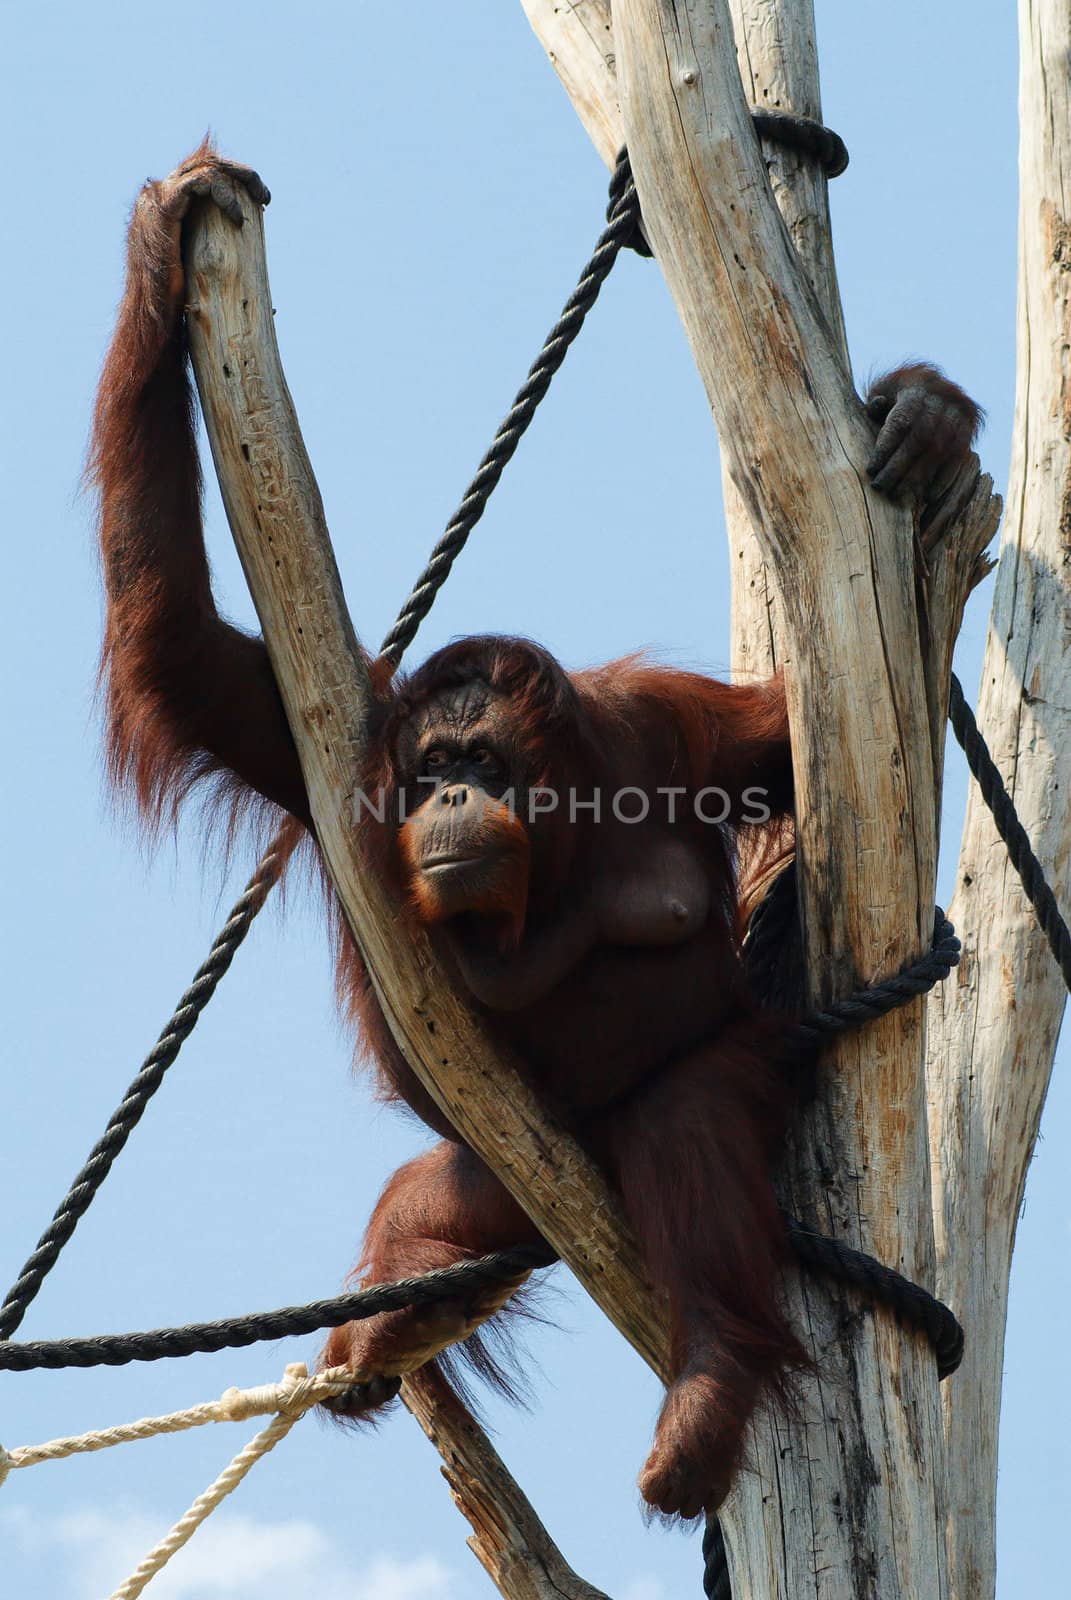 Orangutan by Kamensky